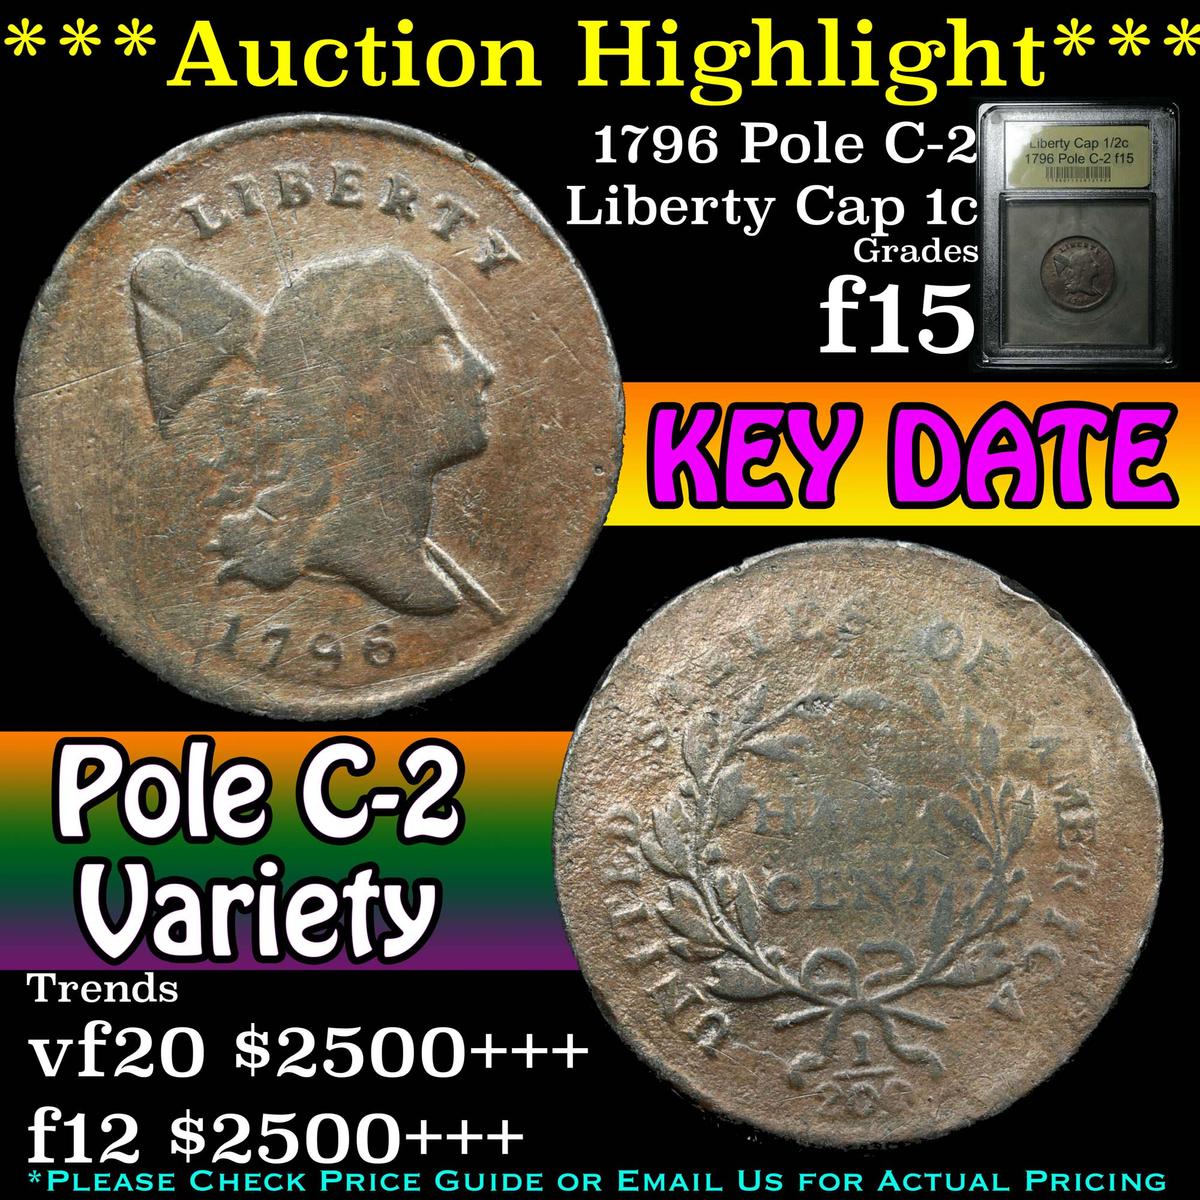 ***Auction Highlight*** Key Date 1796 Pole C-2 Liberty Cap 1/2c Graded f+ by USCG (fc)